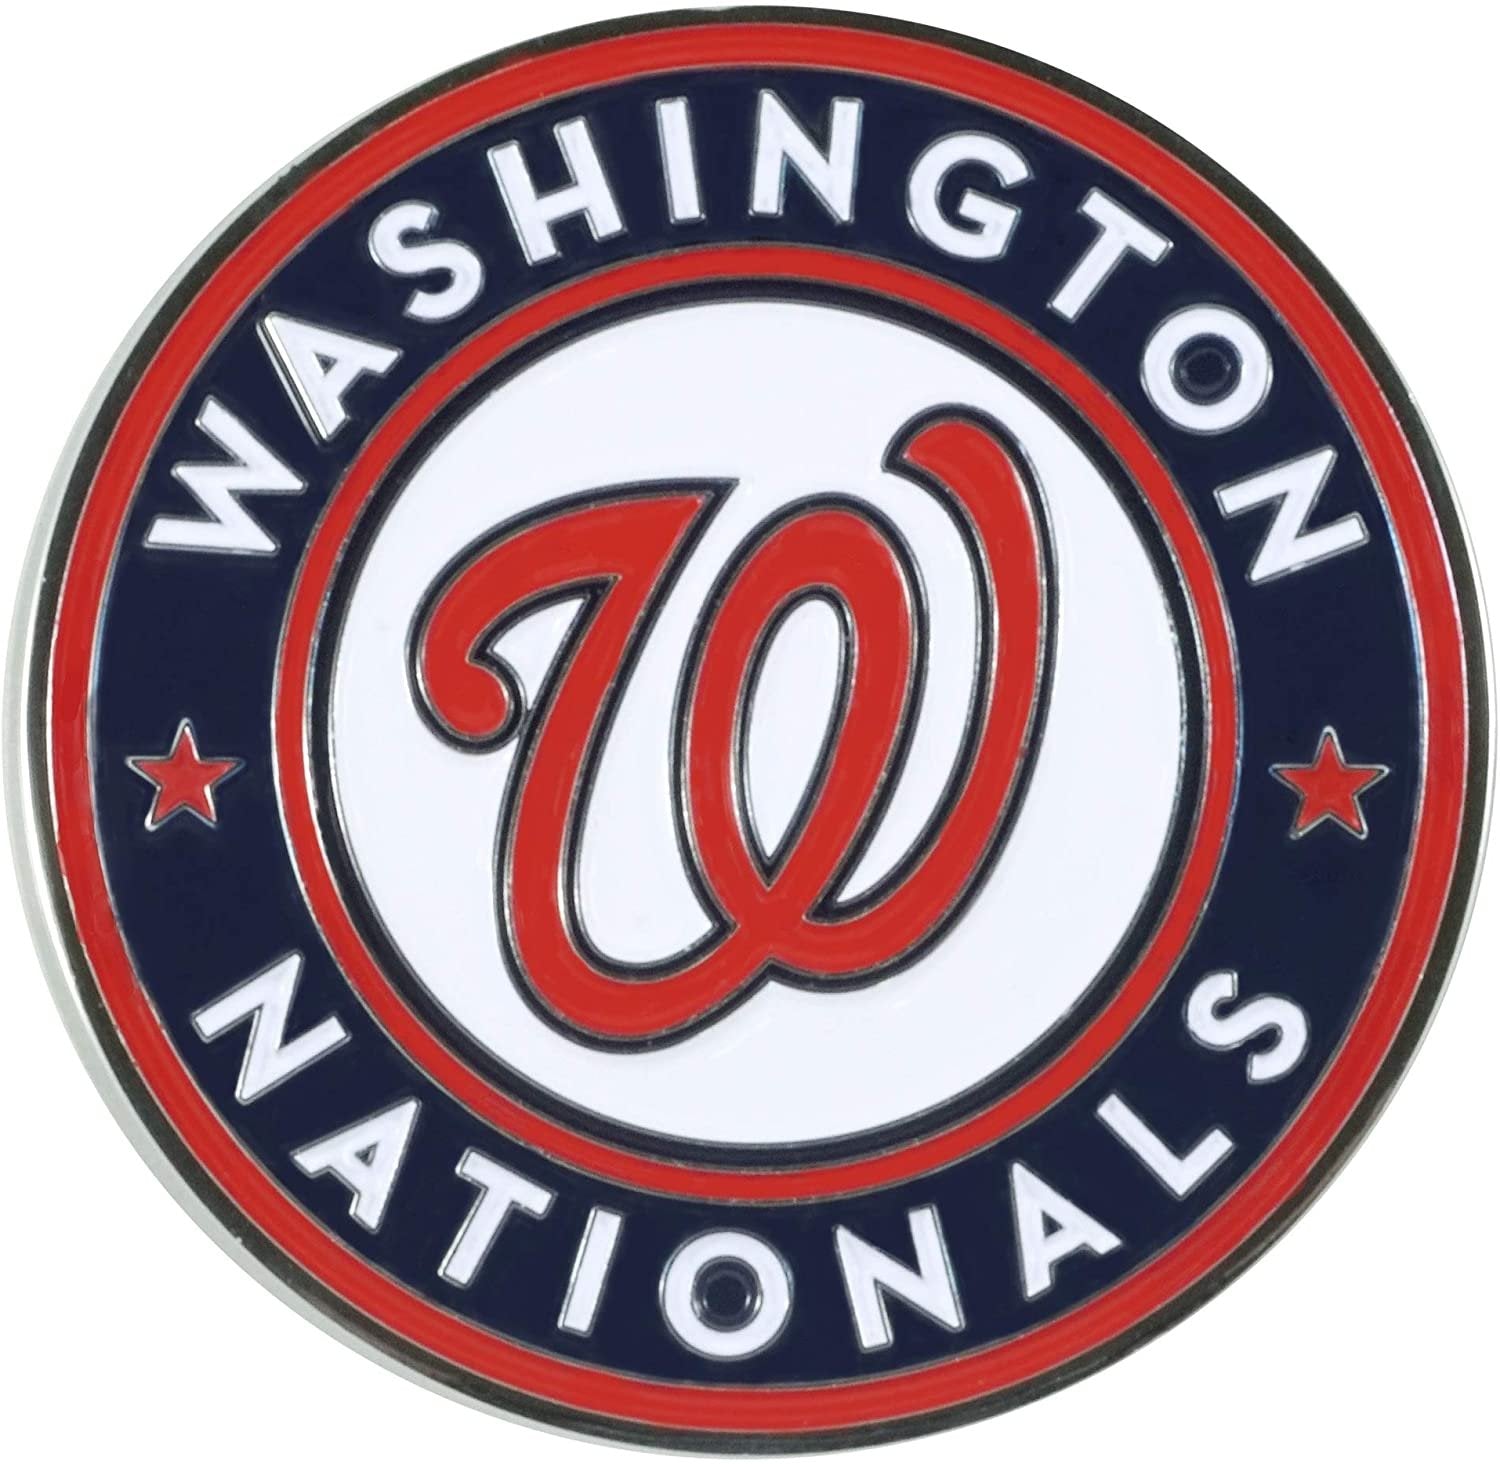 Washington Nationals Premium Solid Metal Raised Auto Emblem, Team Color, Shape Cut, Adhesive Backing